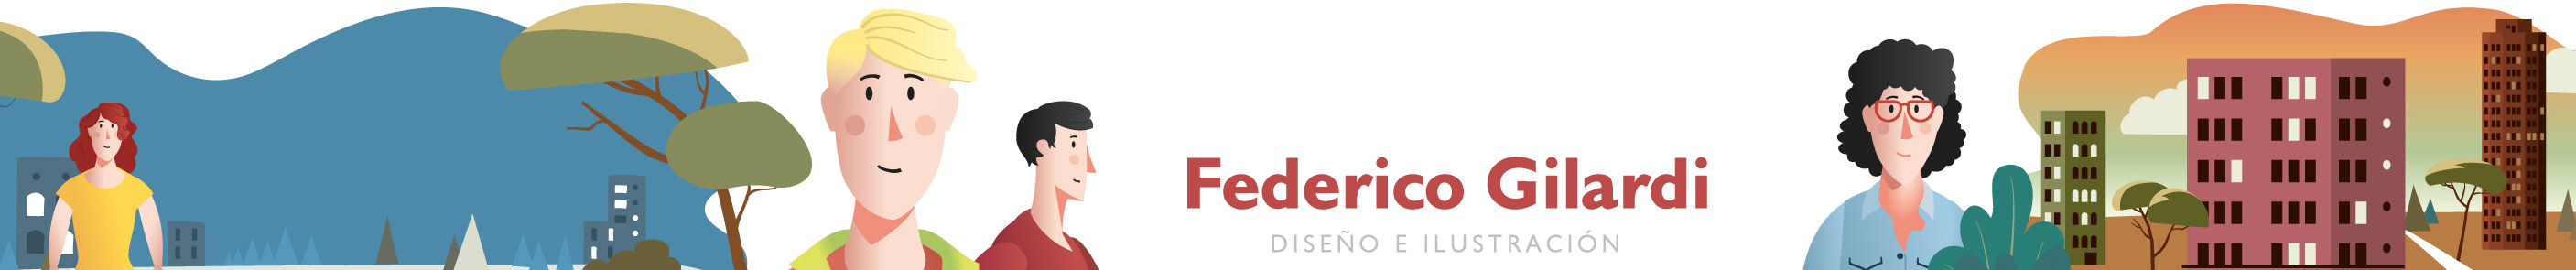 Profielbanner van Federico Gilardi